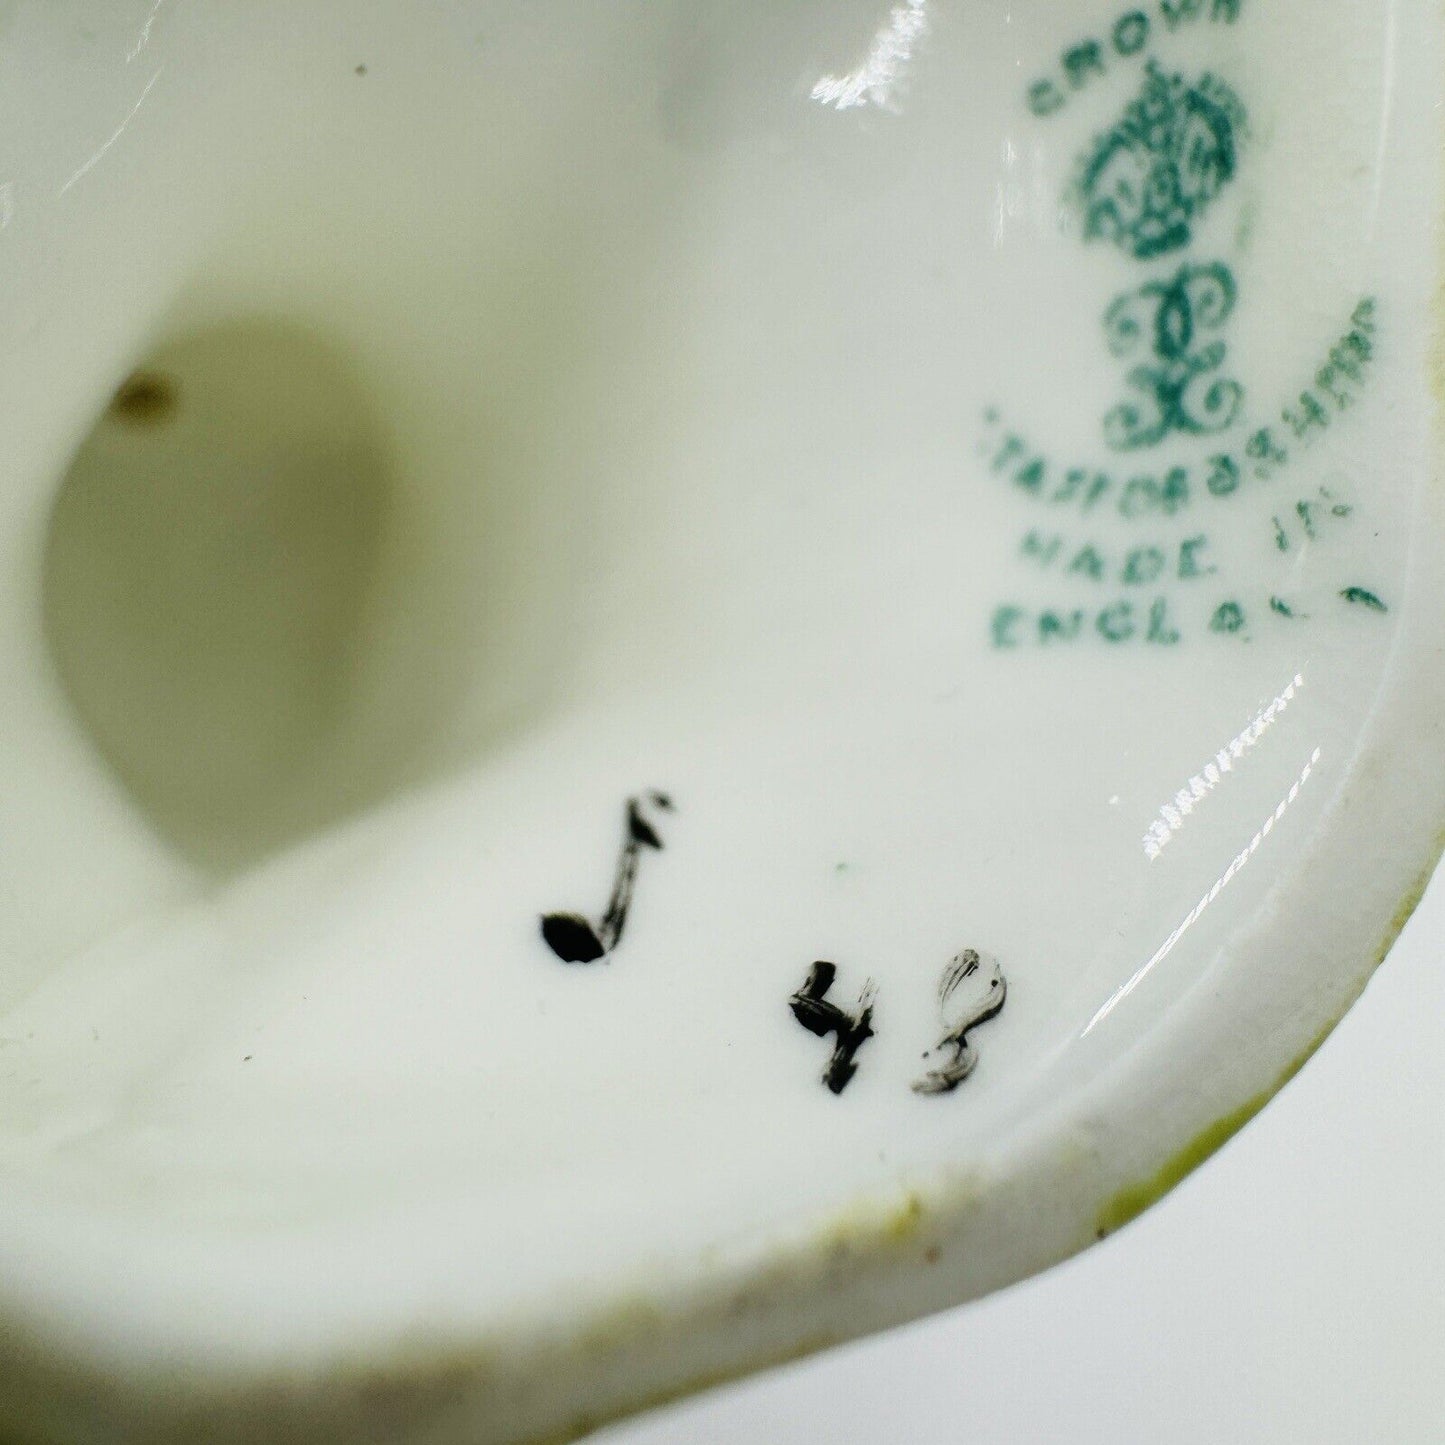 Antique Crown staffordshire porcelain england bird figurines 1930 handpainted